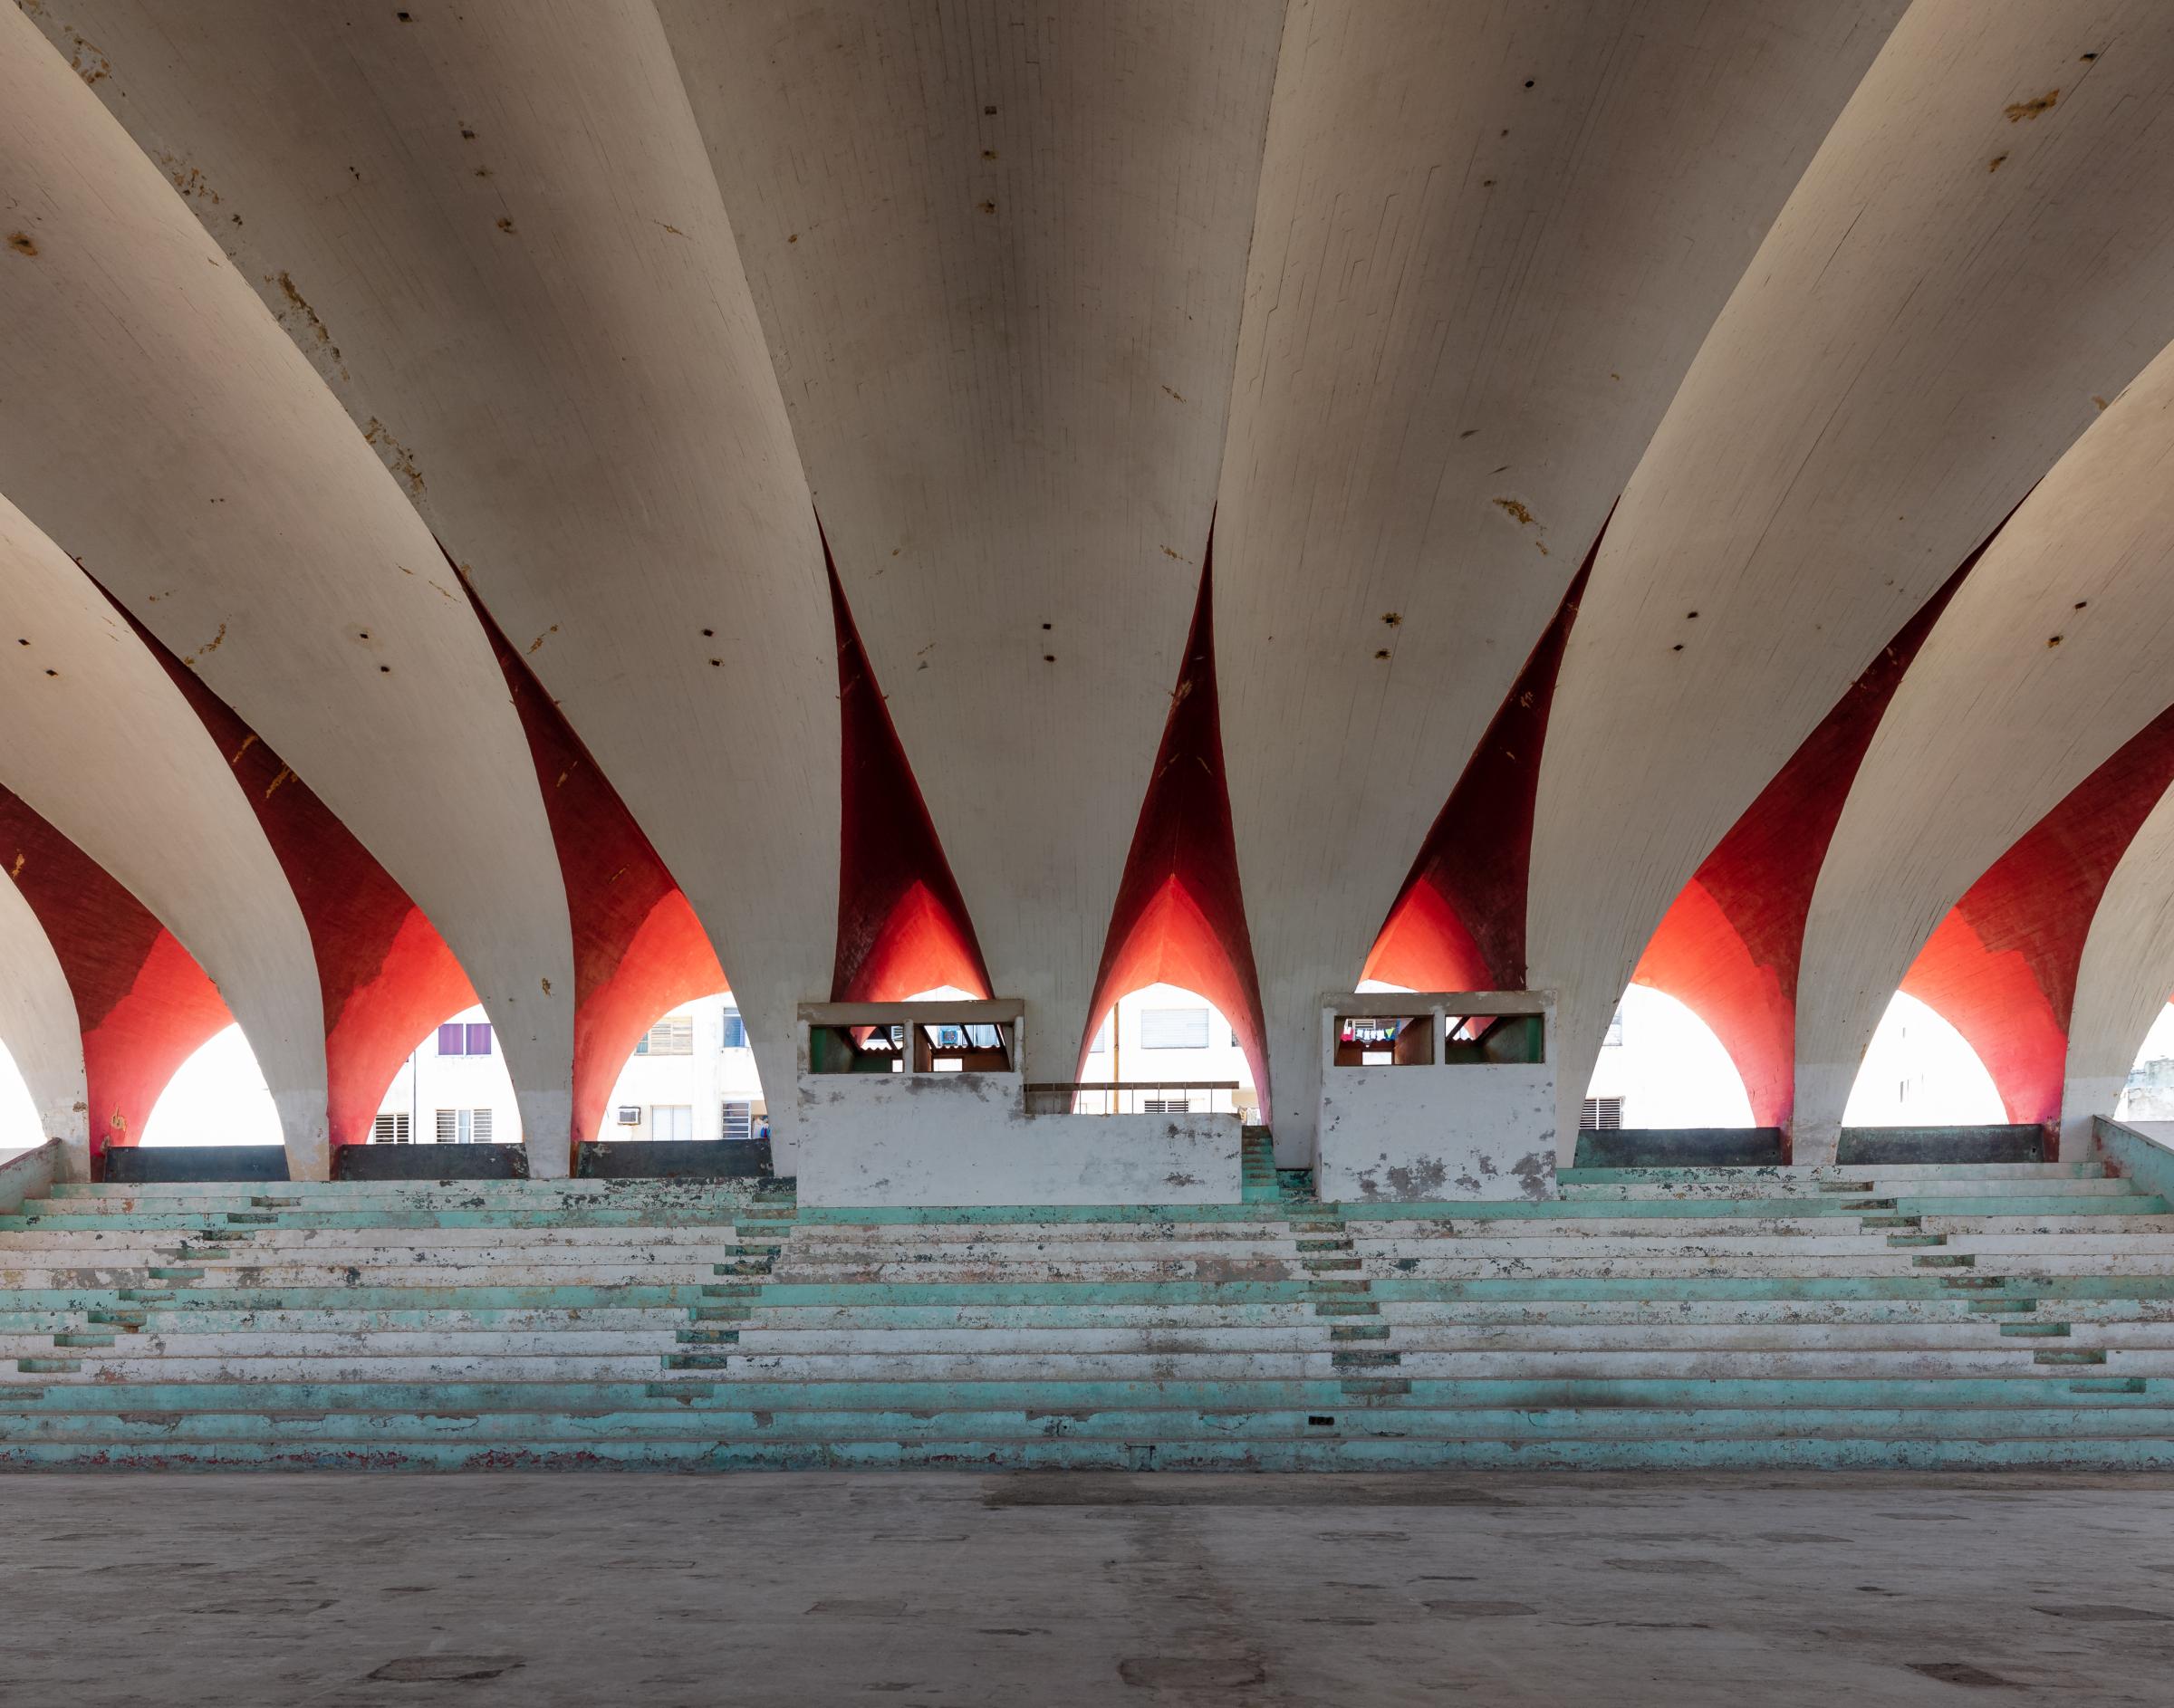 Connecting Concrete: Modernist Architecture from Havana to Miami - Parque Jose Marti Stadium, 1959-60